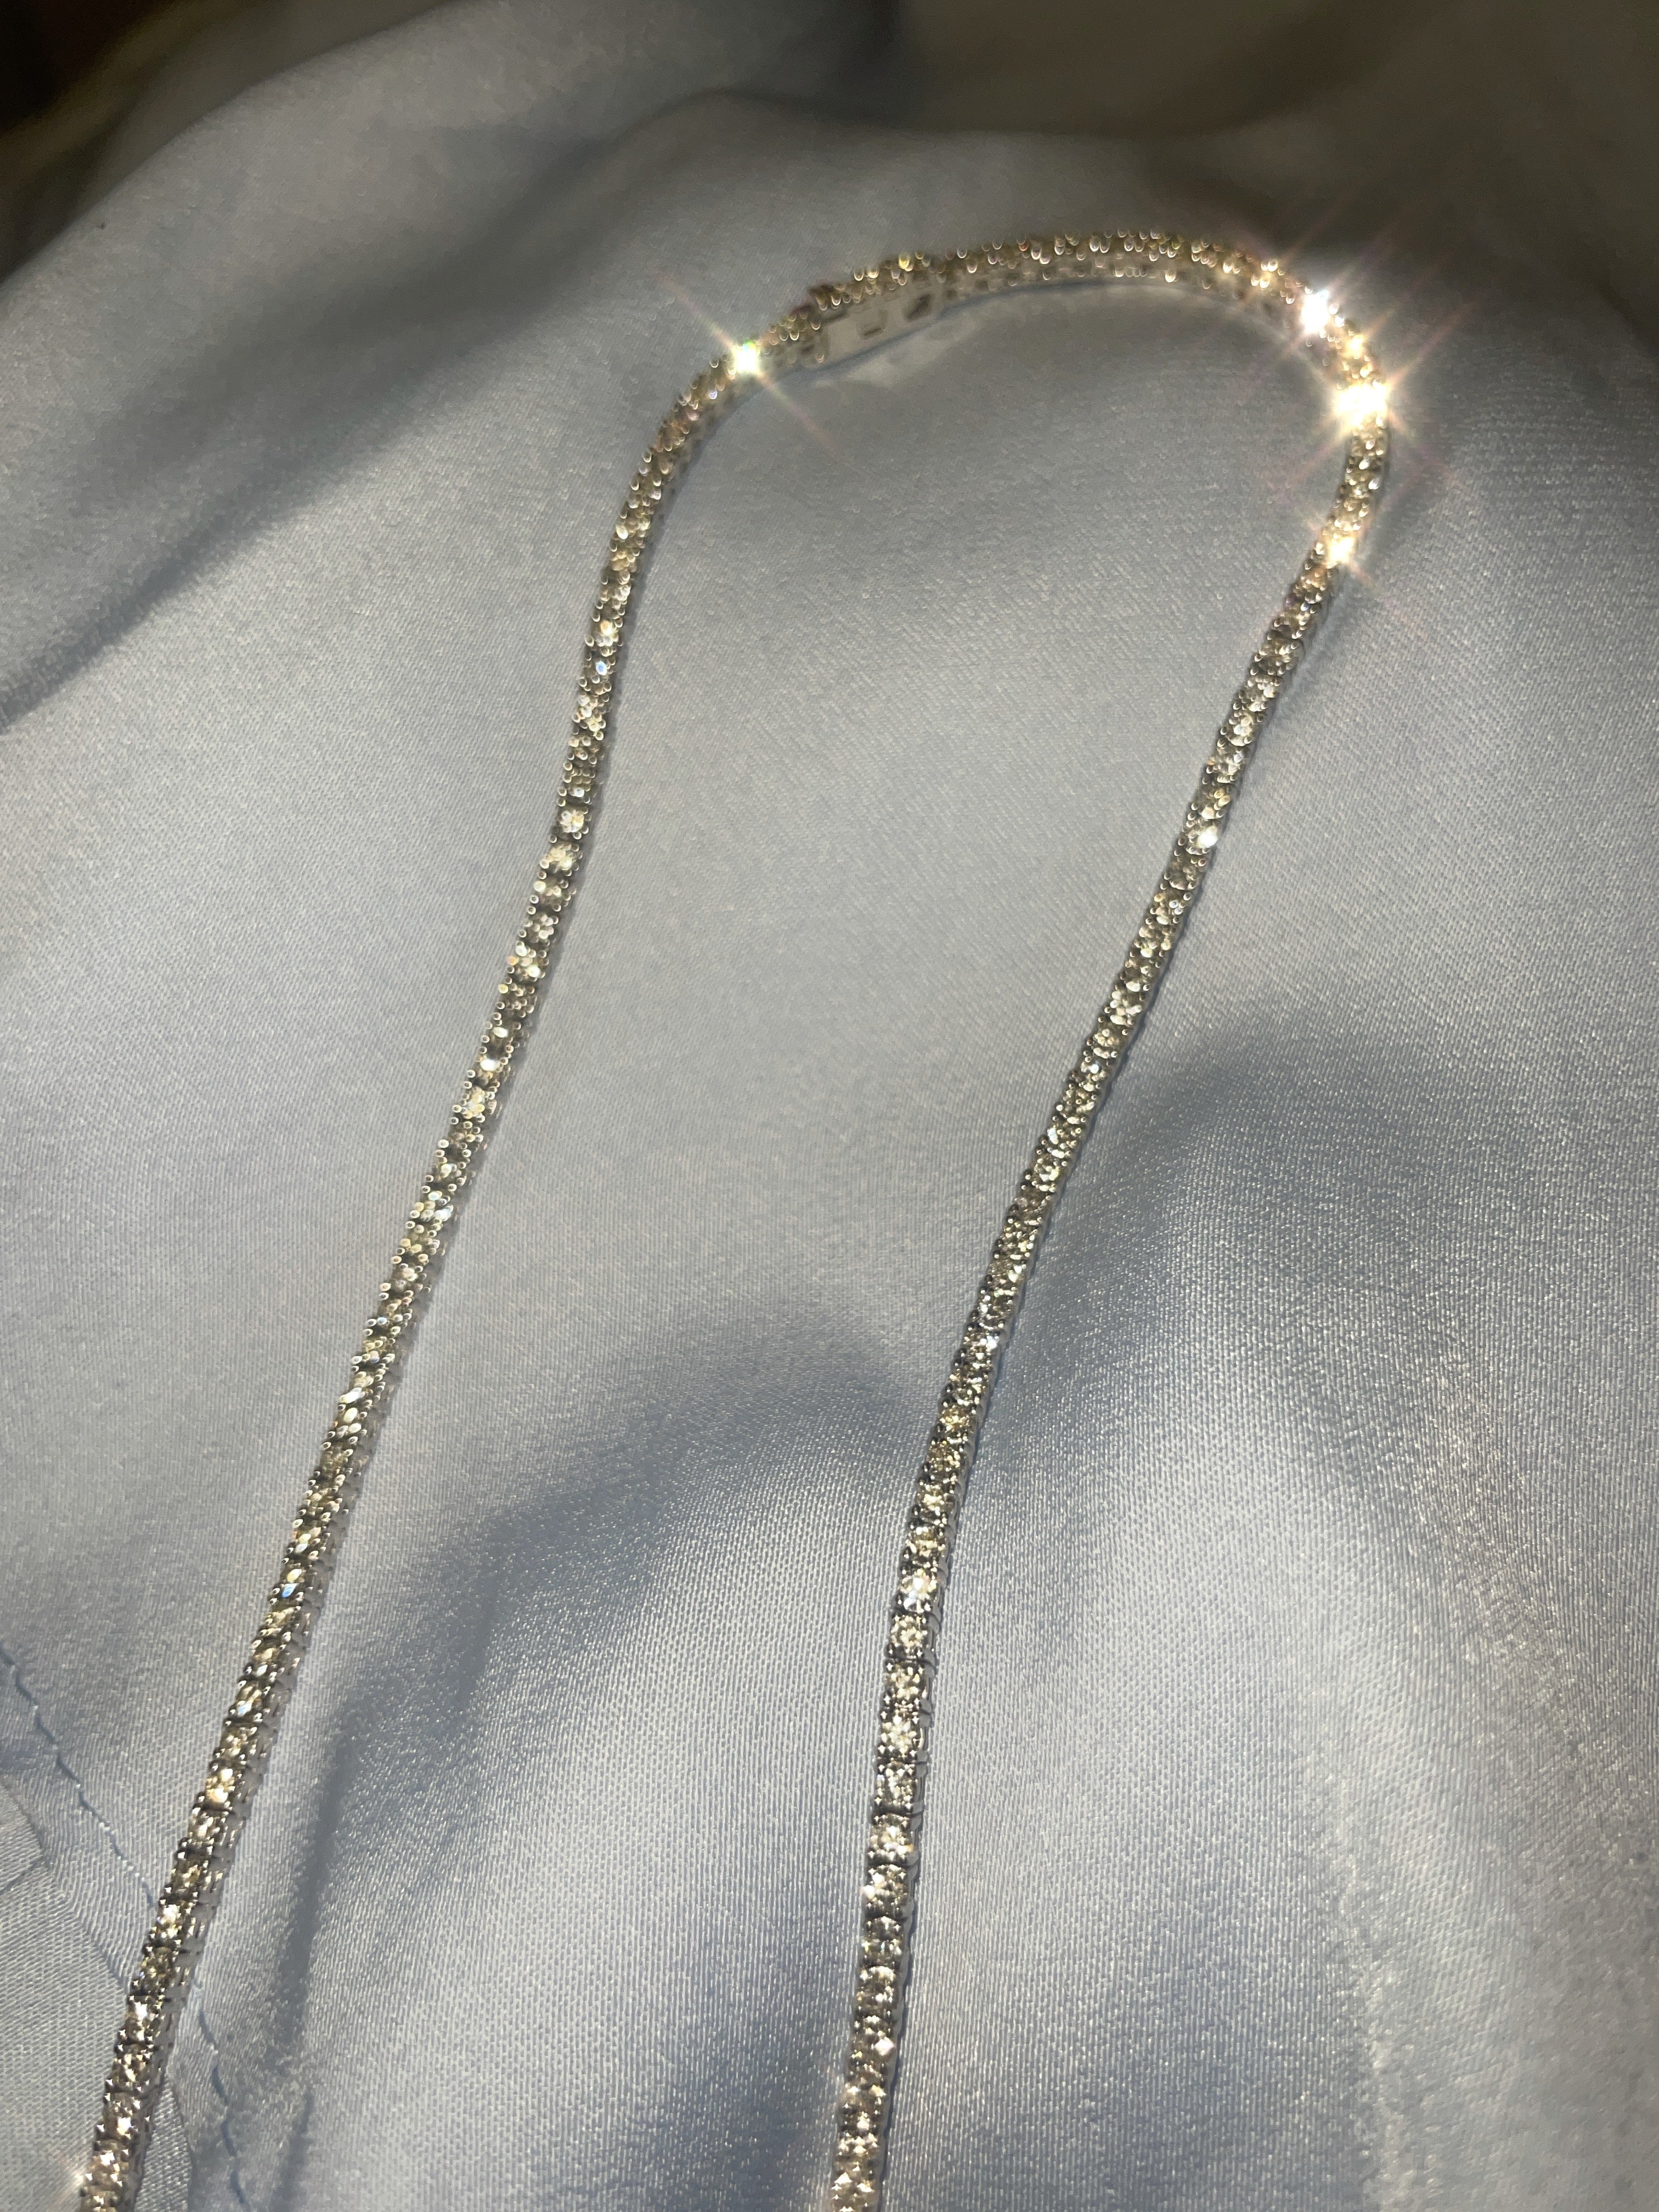 6.57CT Natural Diamond Tennis Necklace 14K White Gold 18”